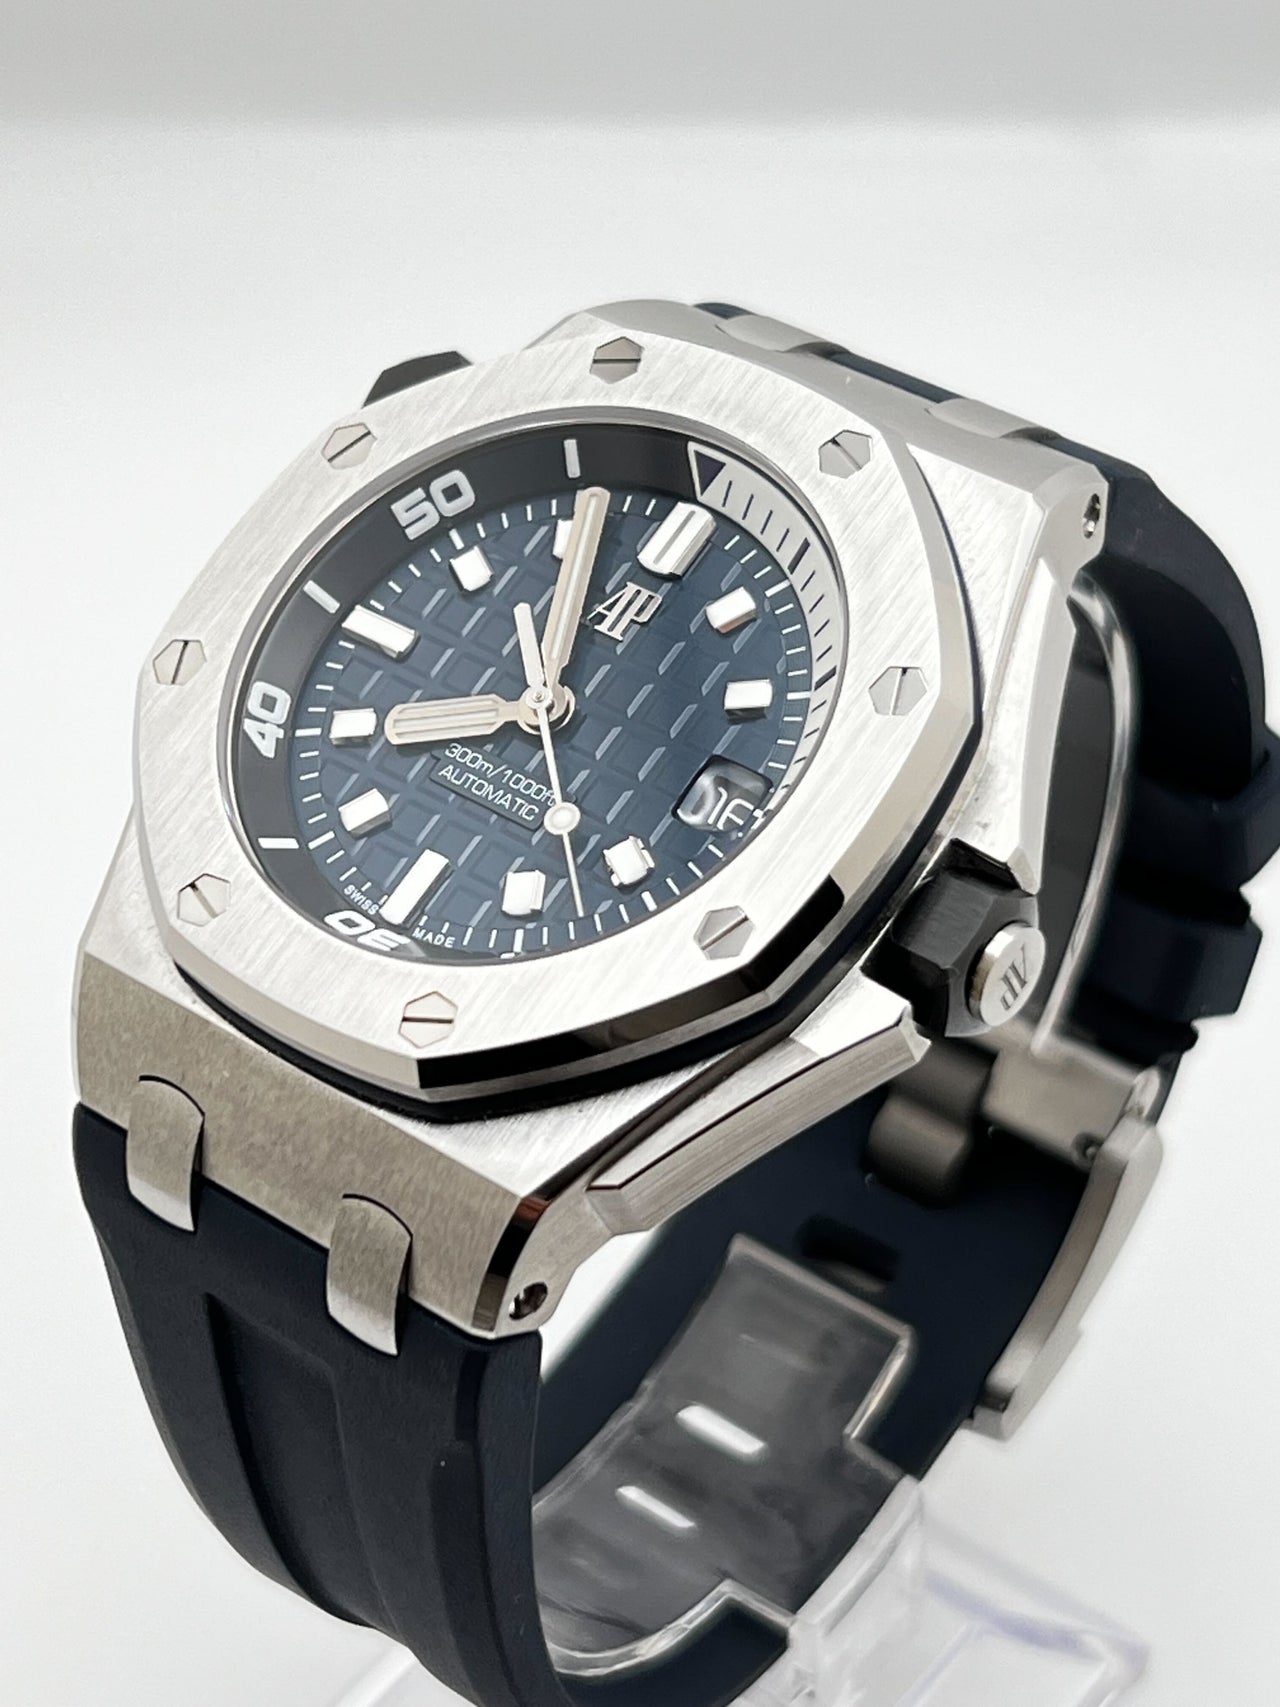 Luxury Watch Audemars Piguet Royal Oak Offshore Diver Stainless Steel Blue Dial 15720ST.OO.A027CA.01 Wrist Aficionado